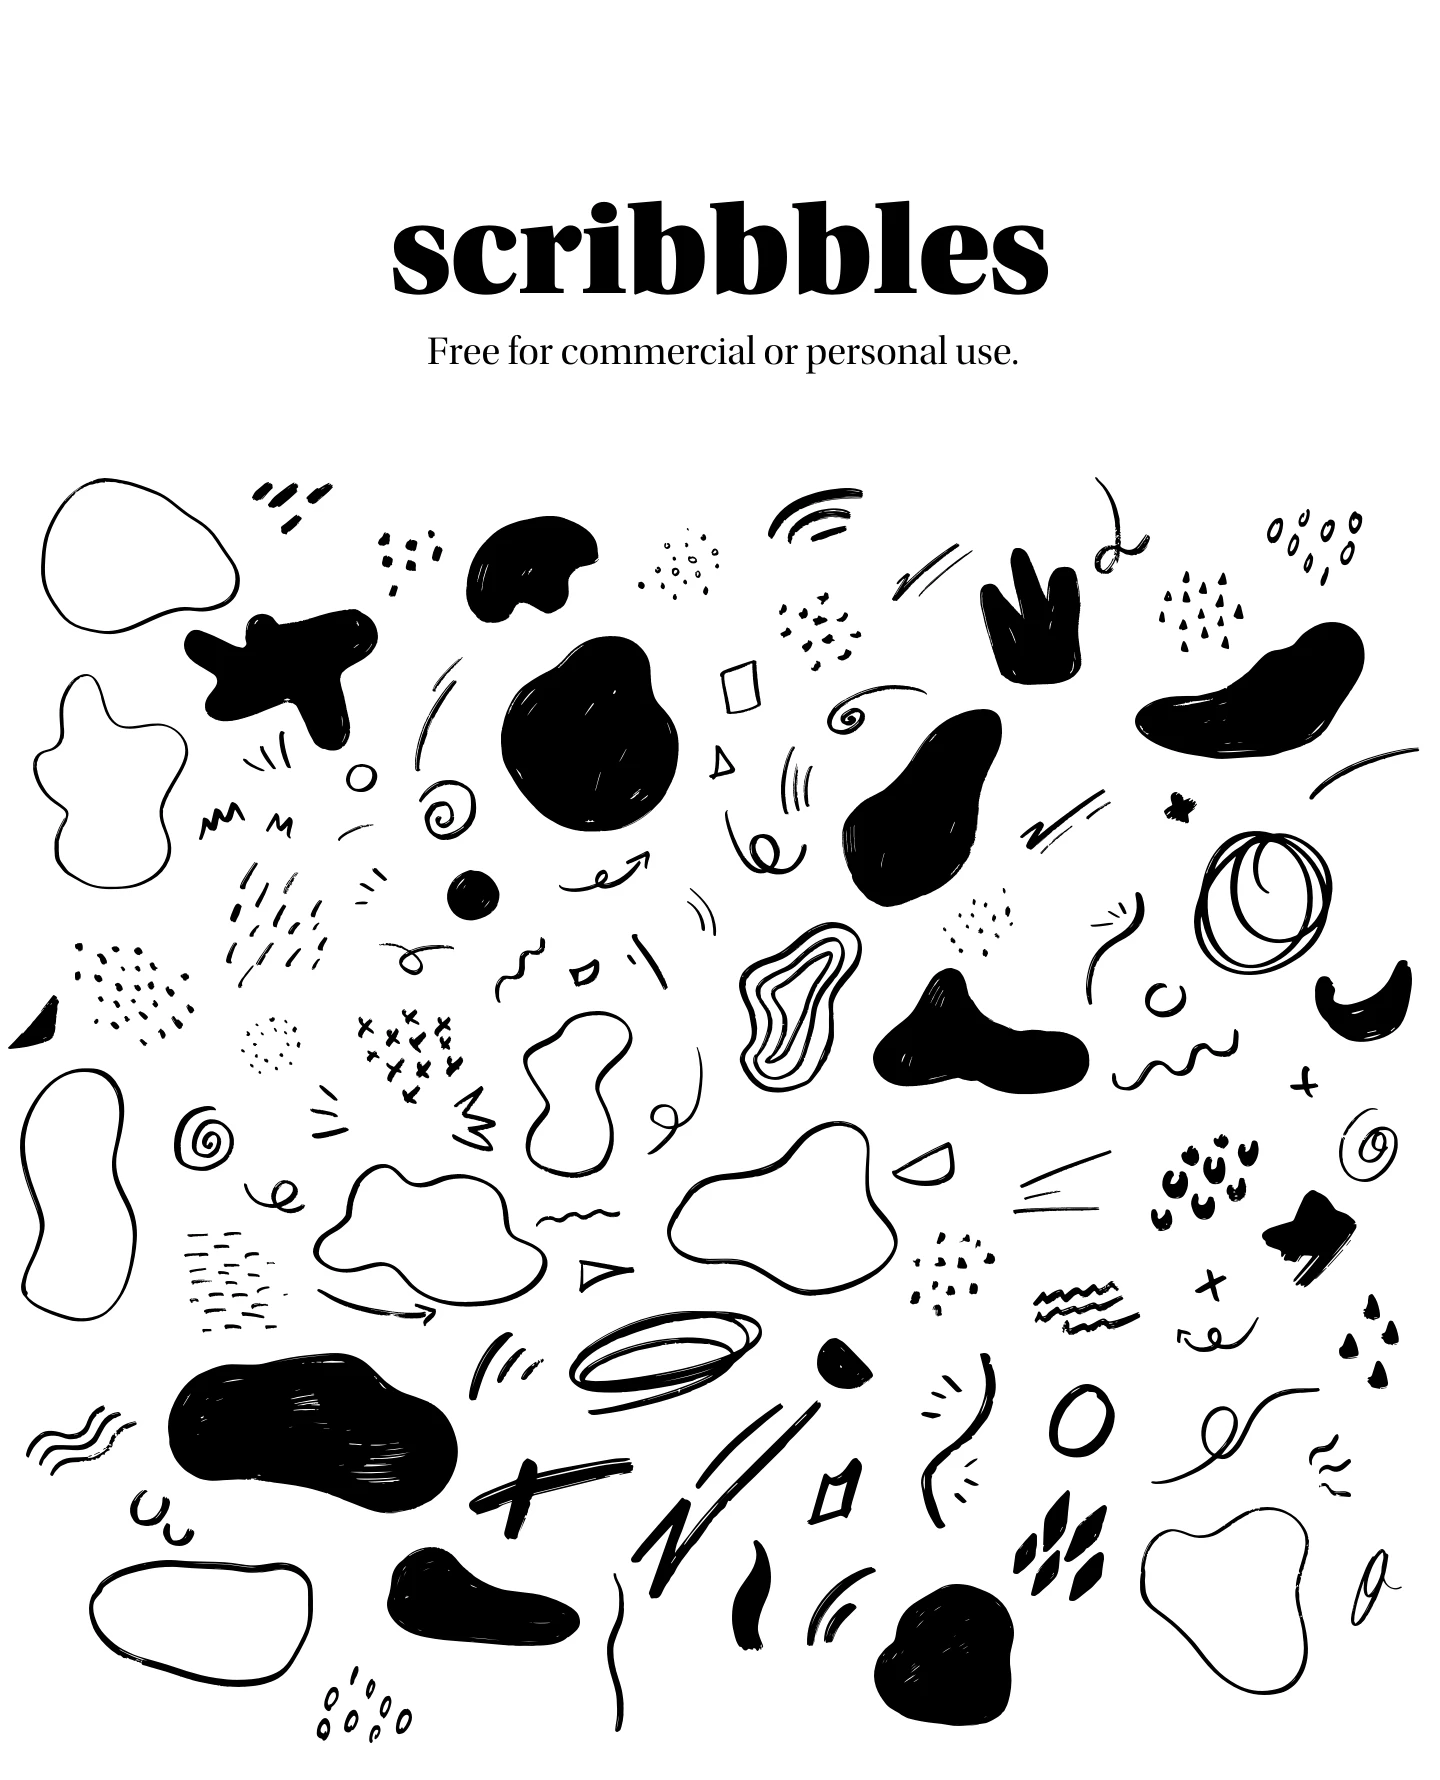 Scribbbles Illustrations